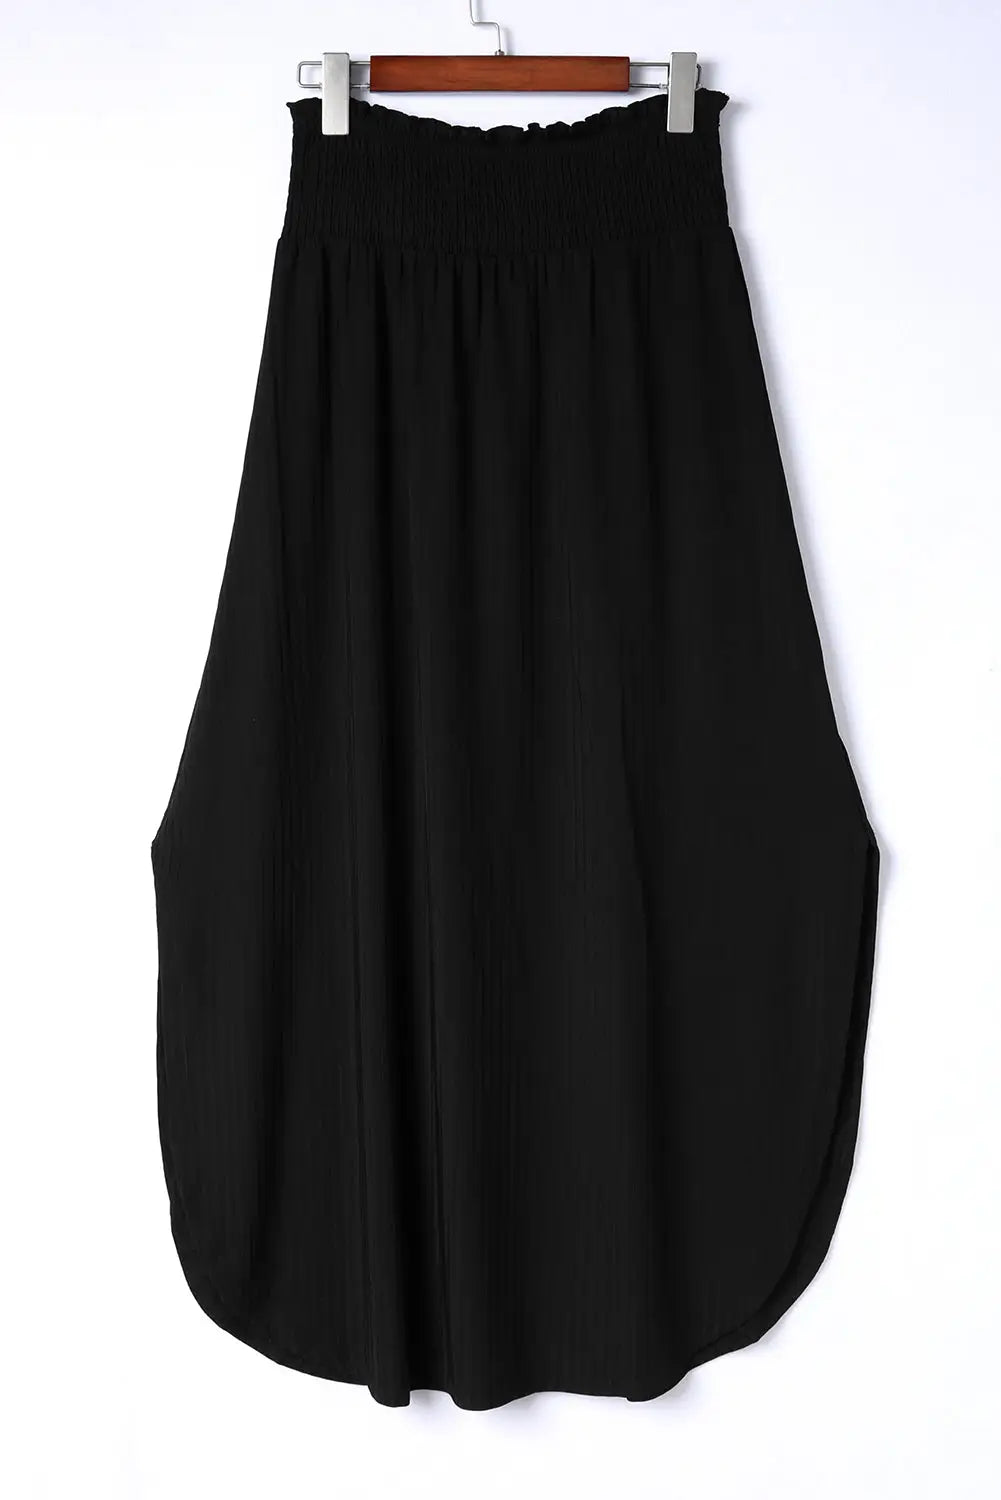 Black smocked high waist maxi skirt with slit - skirts